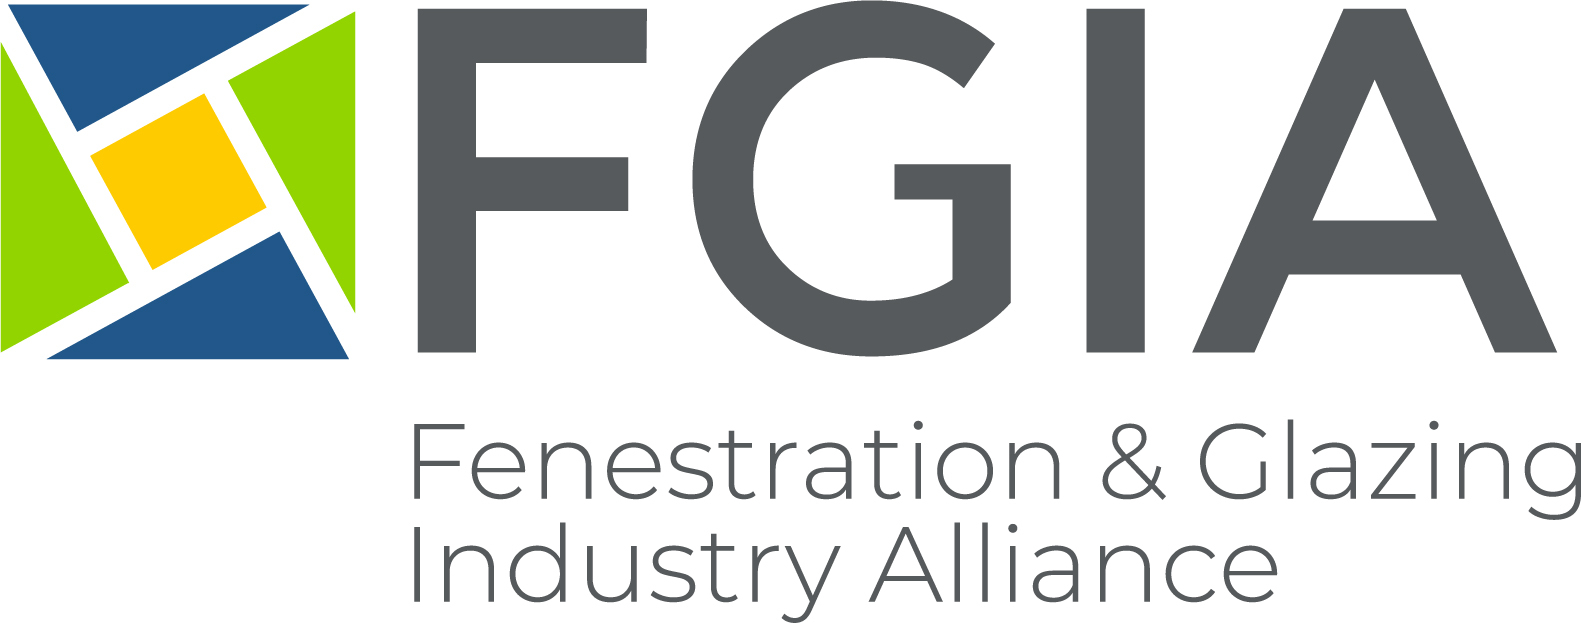 FGIA releases surface temperatures standard